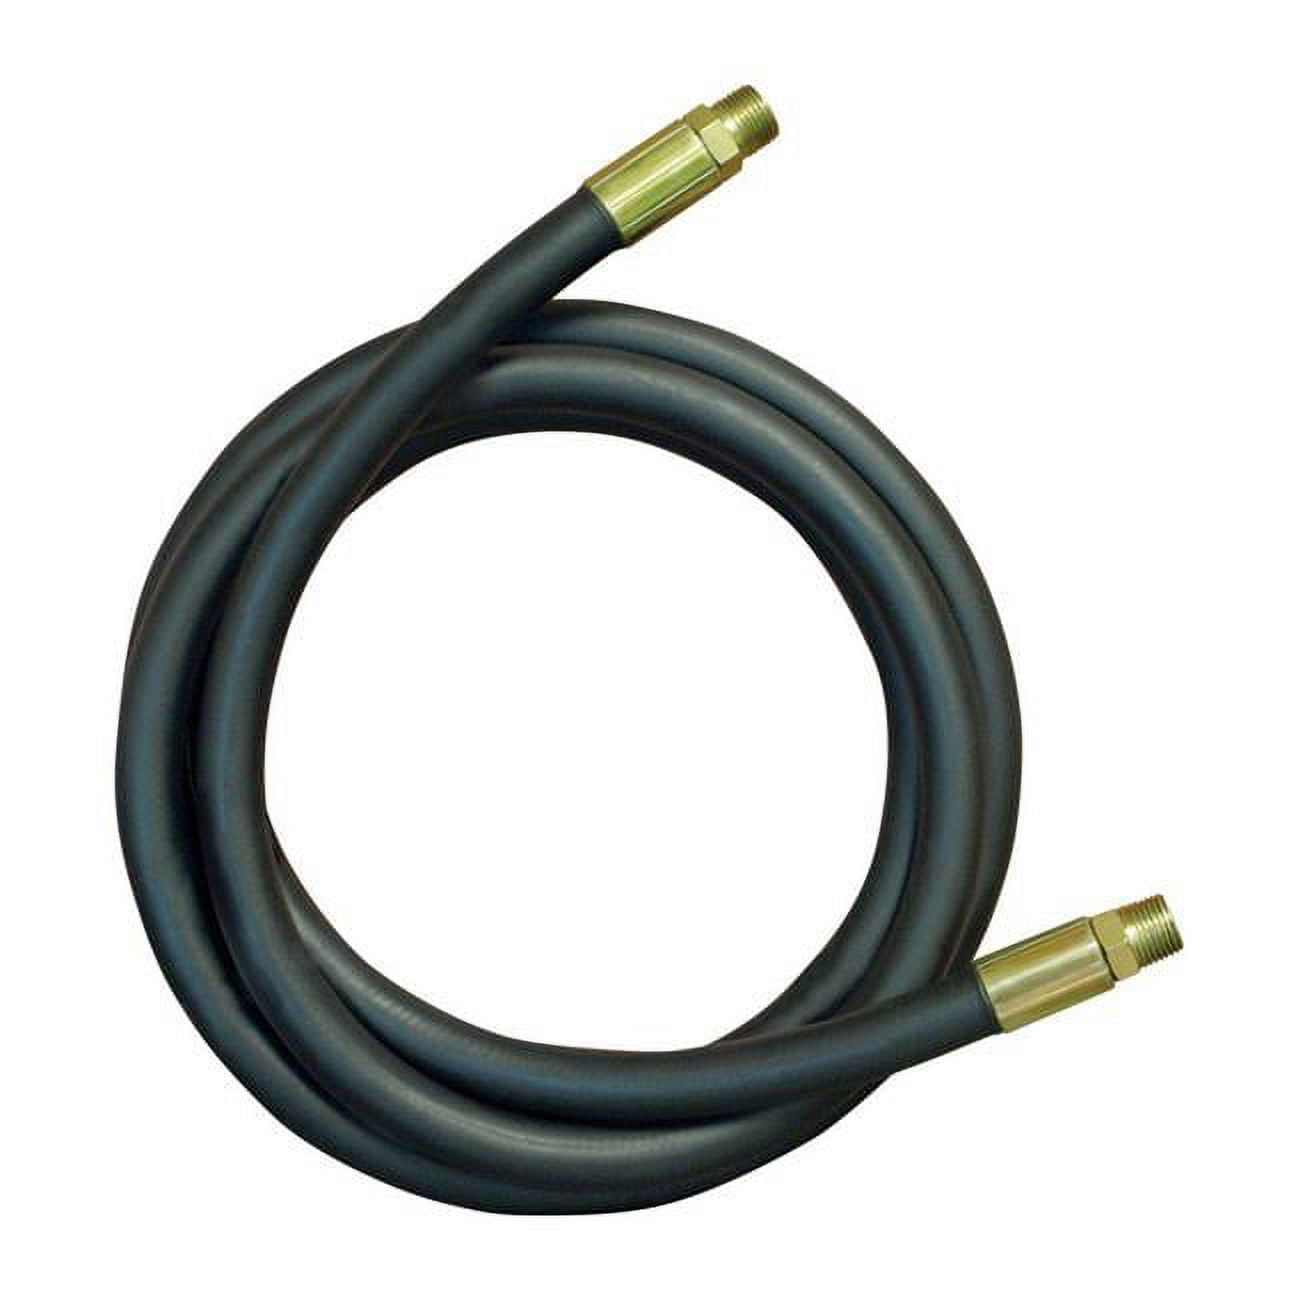 48 In. X 0.5 In. Dia. Universal 2-wire Hydraulic Hose - Black Rubber